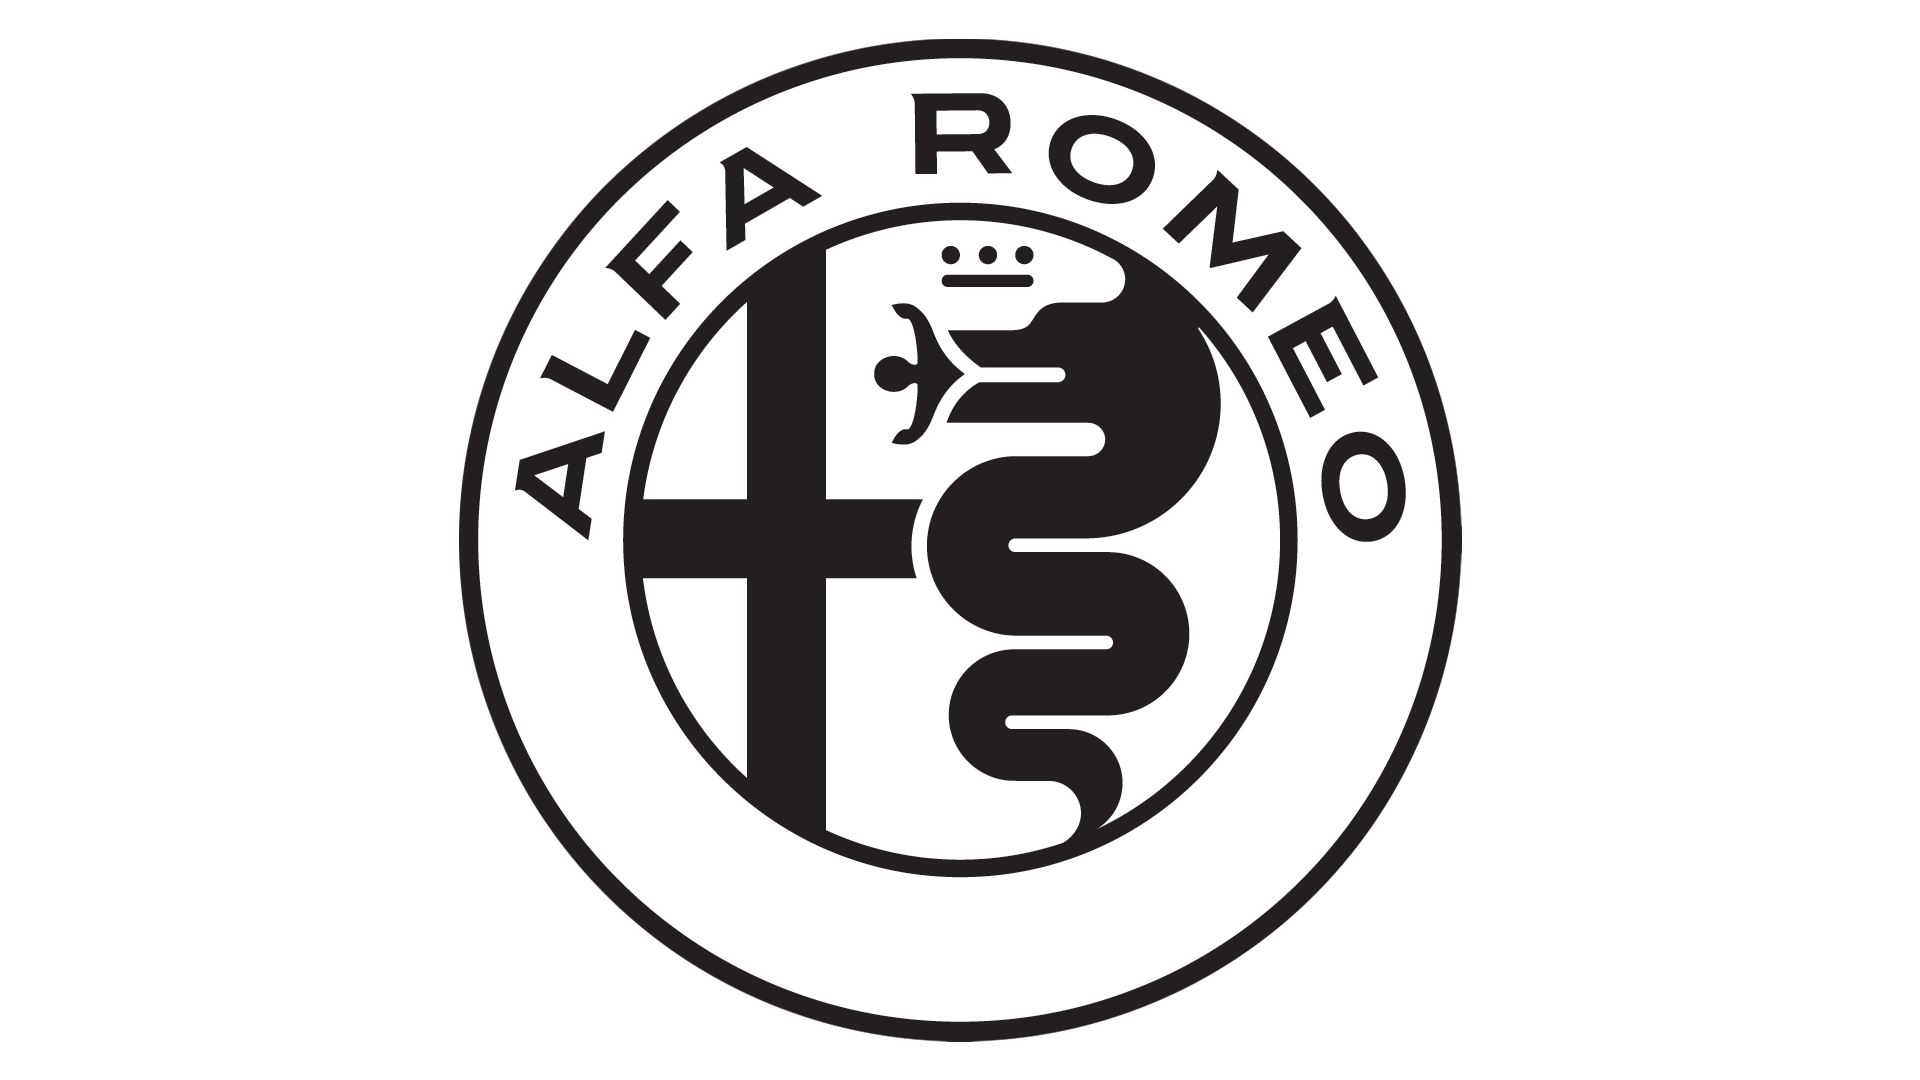 Alfa Romeo icon